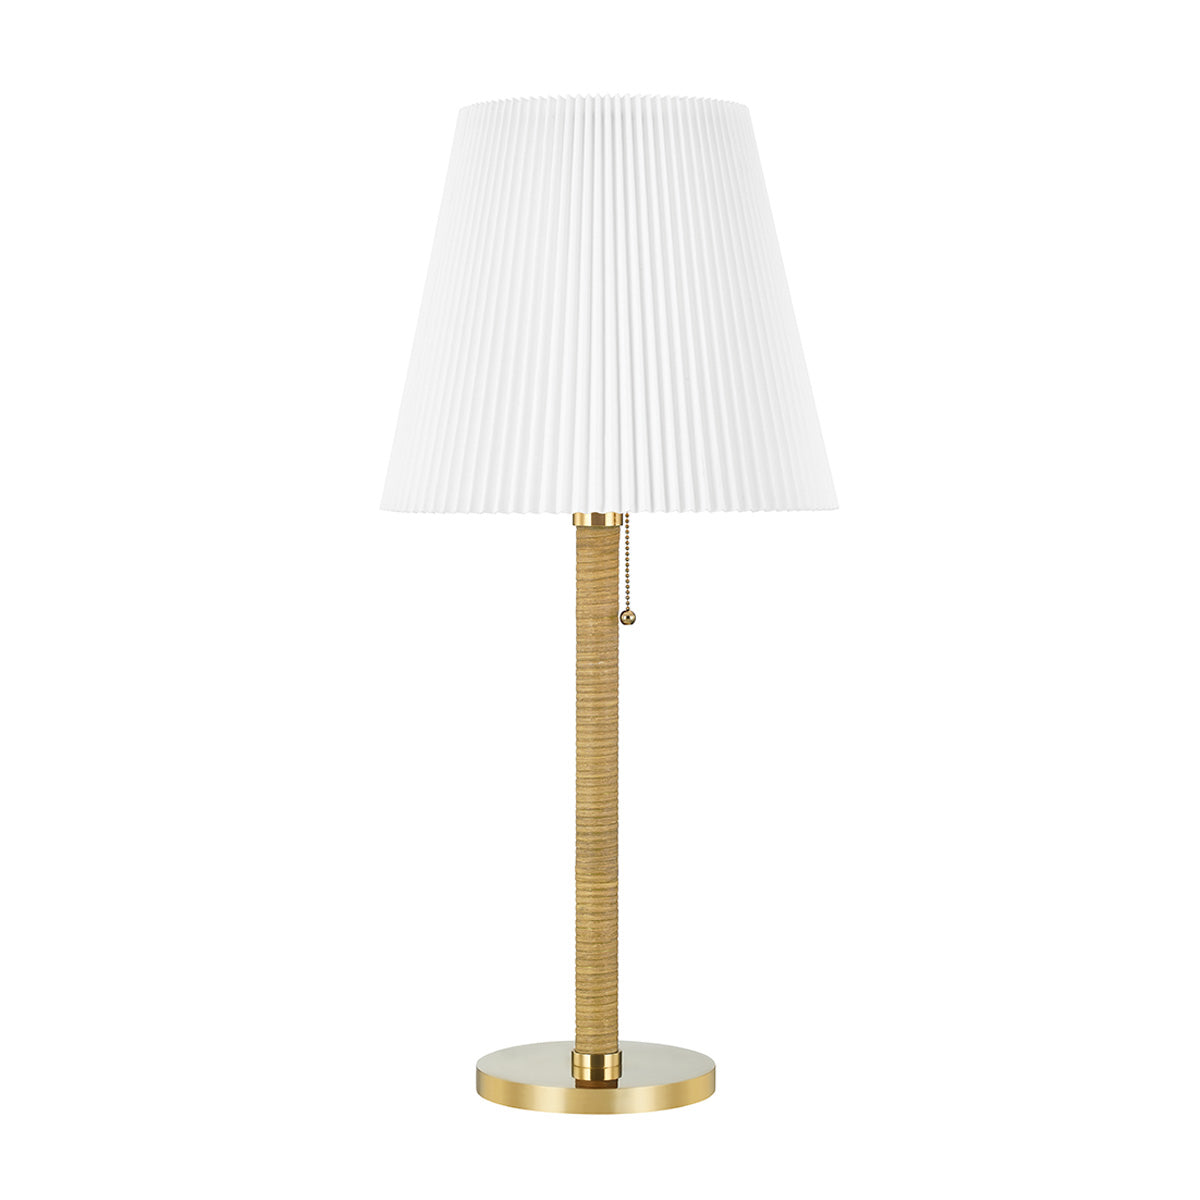 Dorset Table Lamp